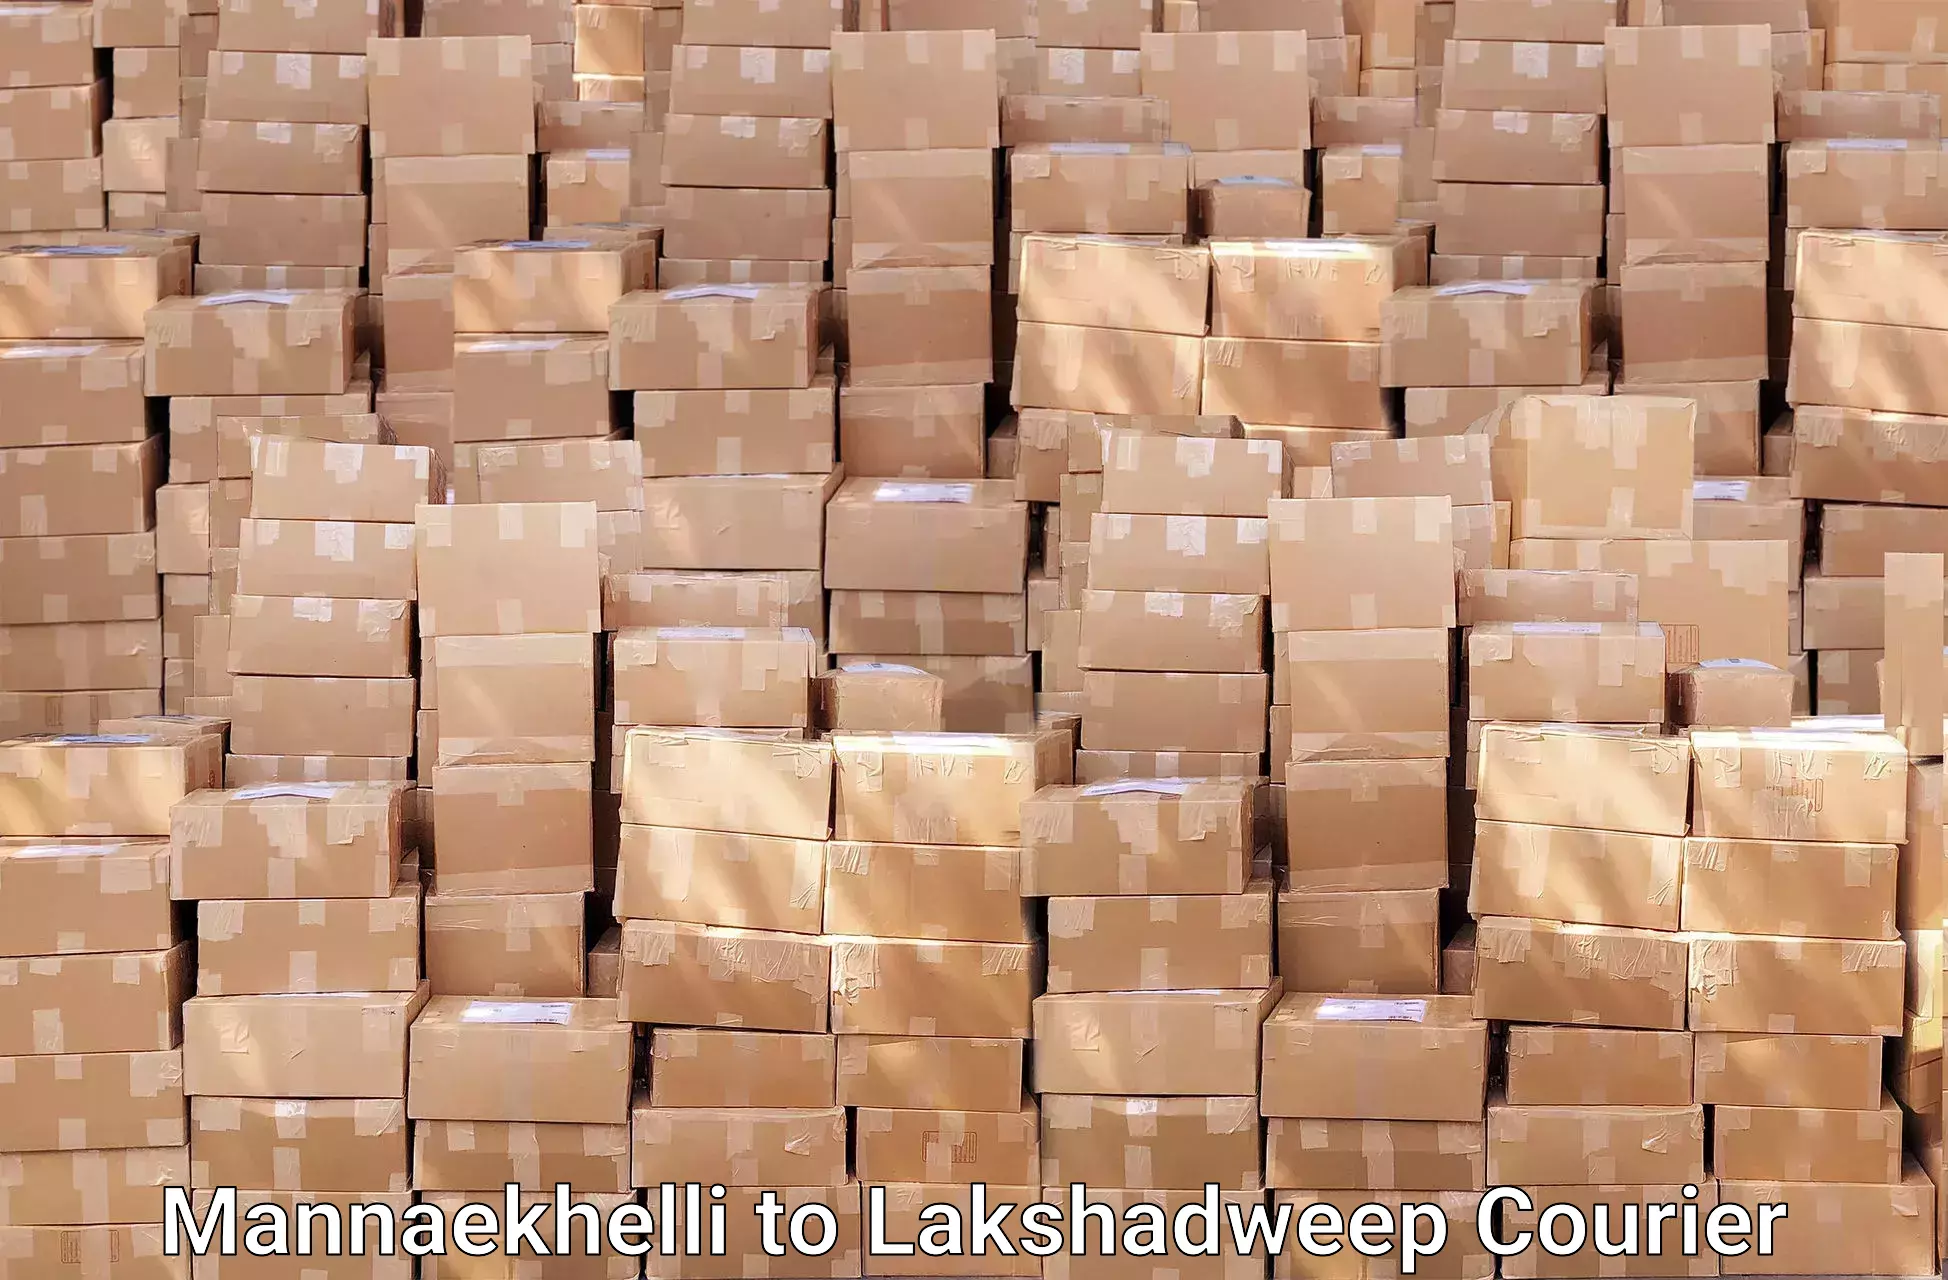 Moving and storage services Mannaekhelli to Lakshadweep